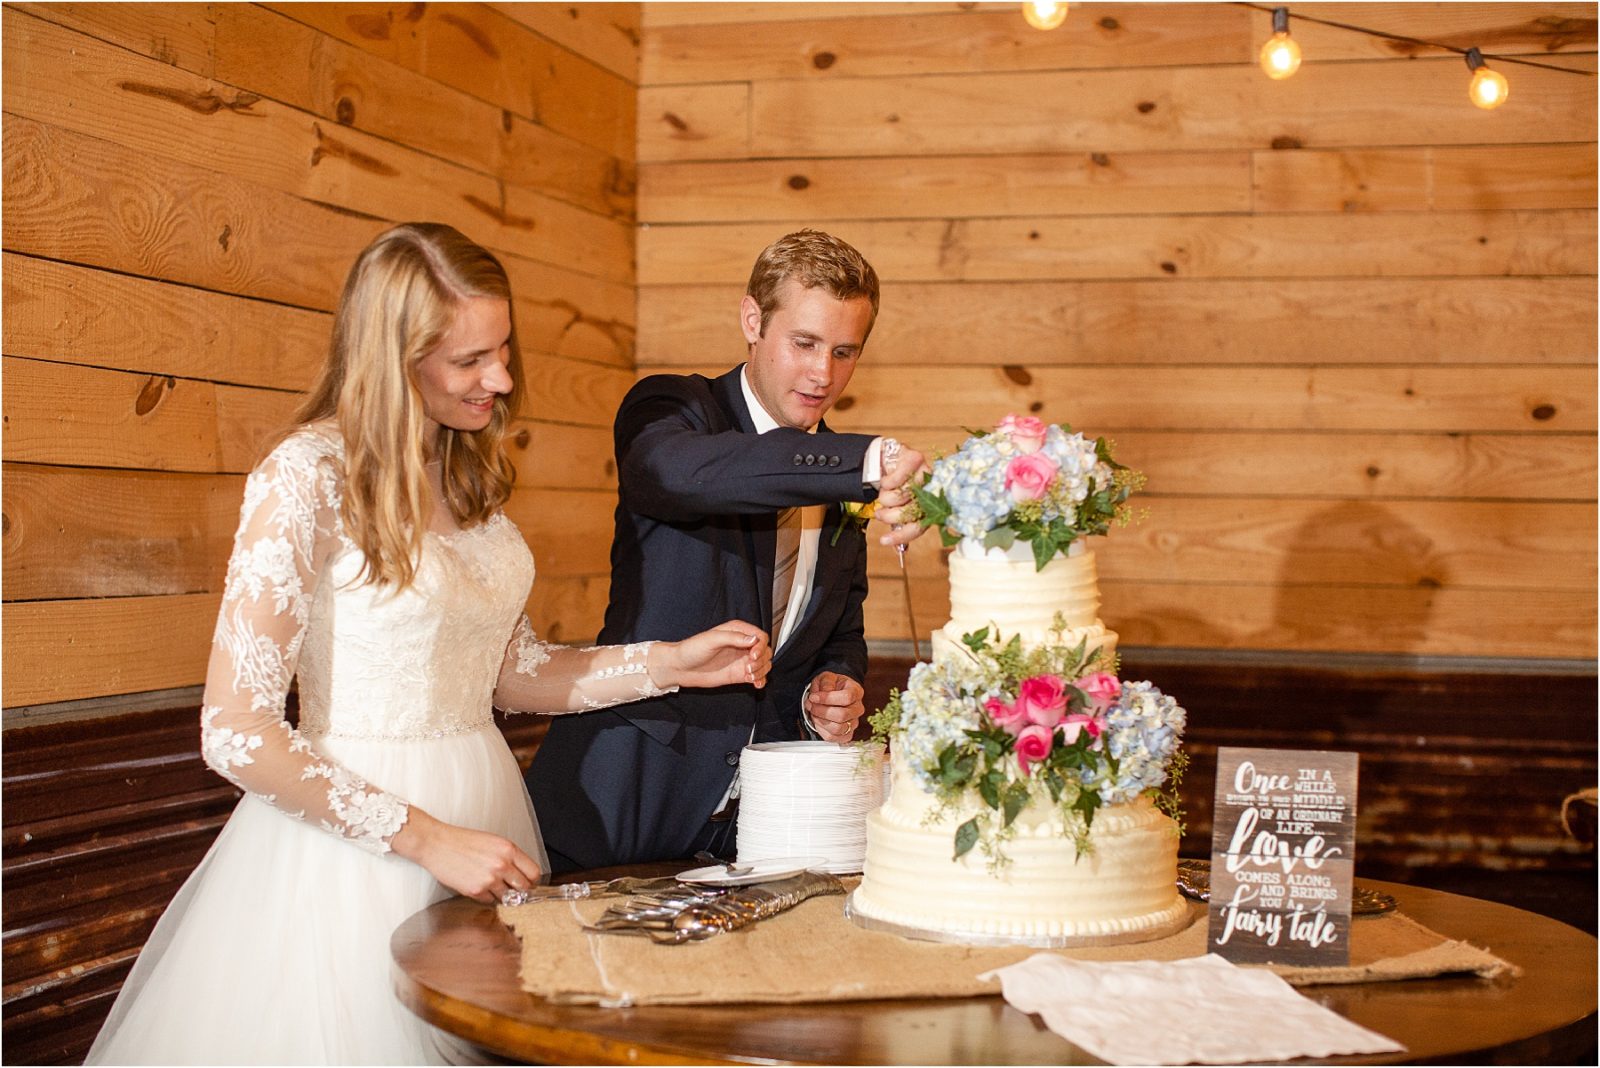 Groom cutting cake for bride in barn venue